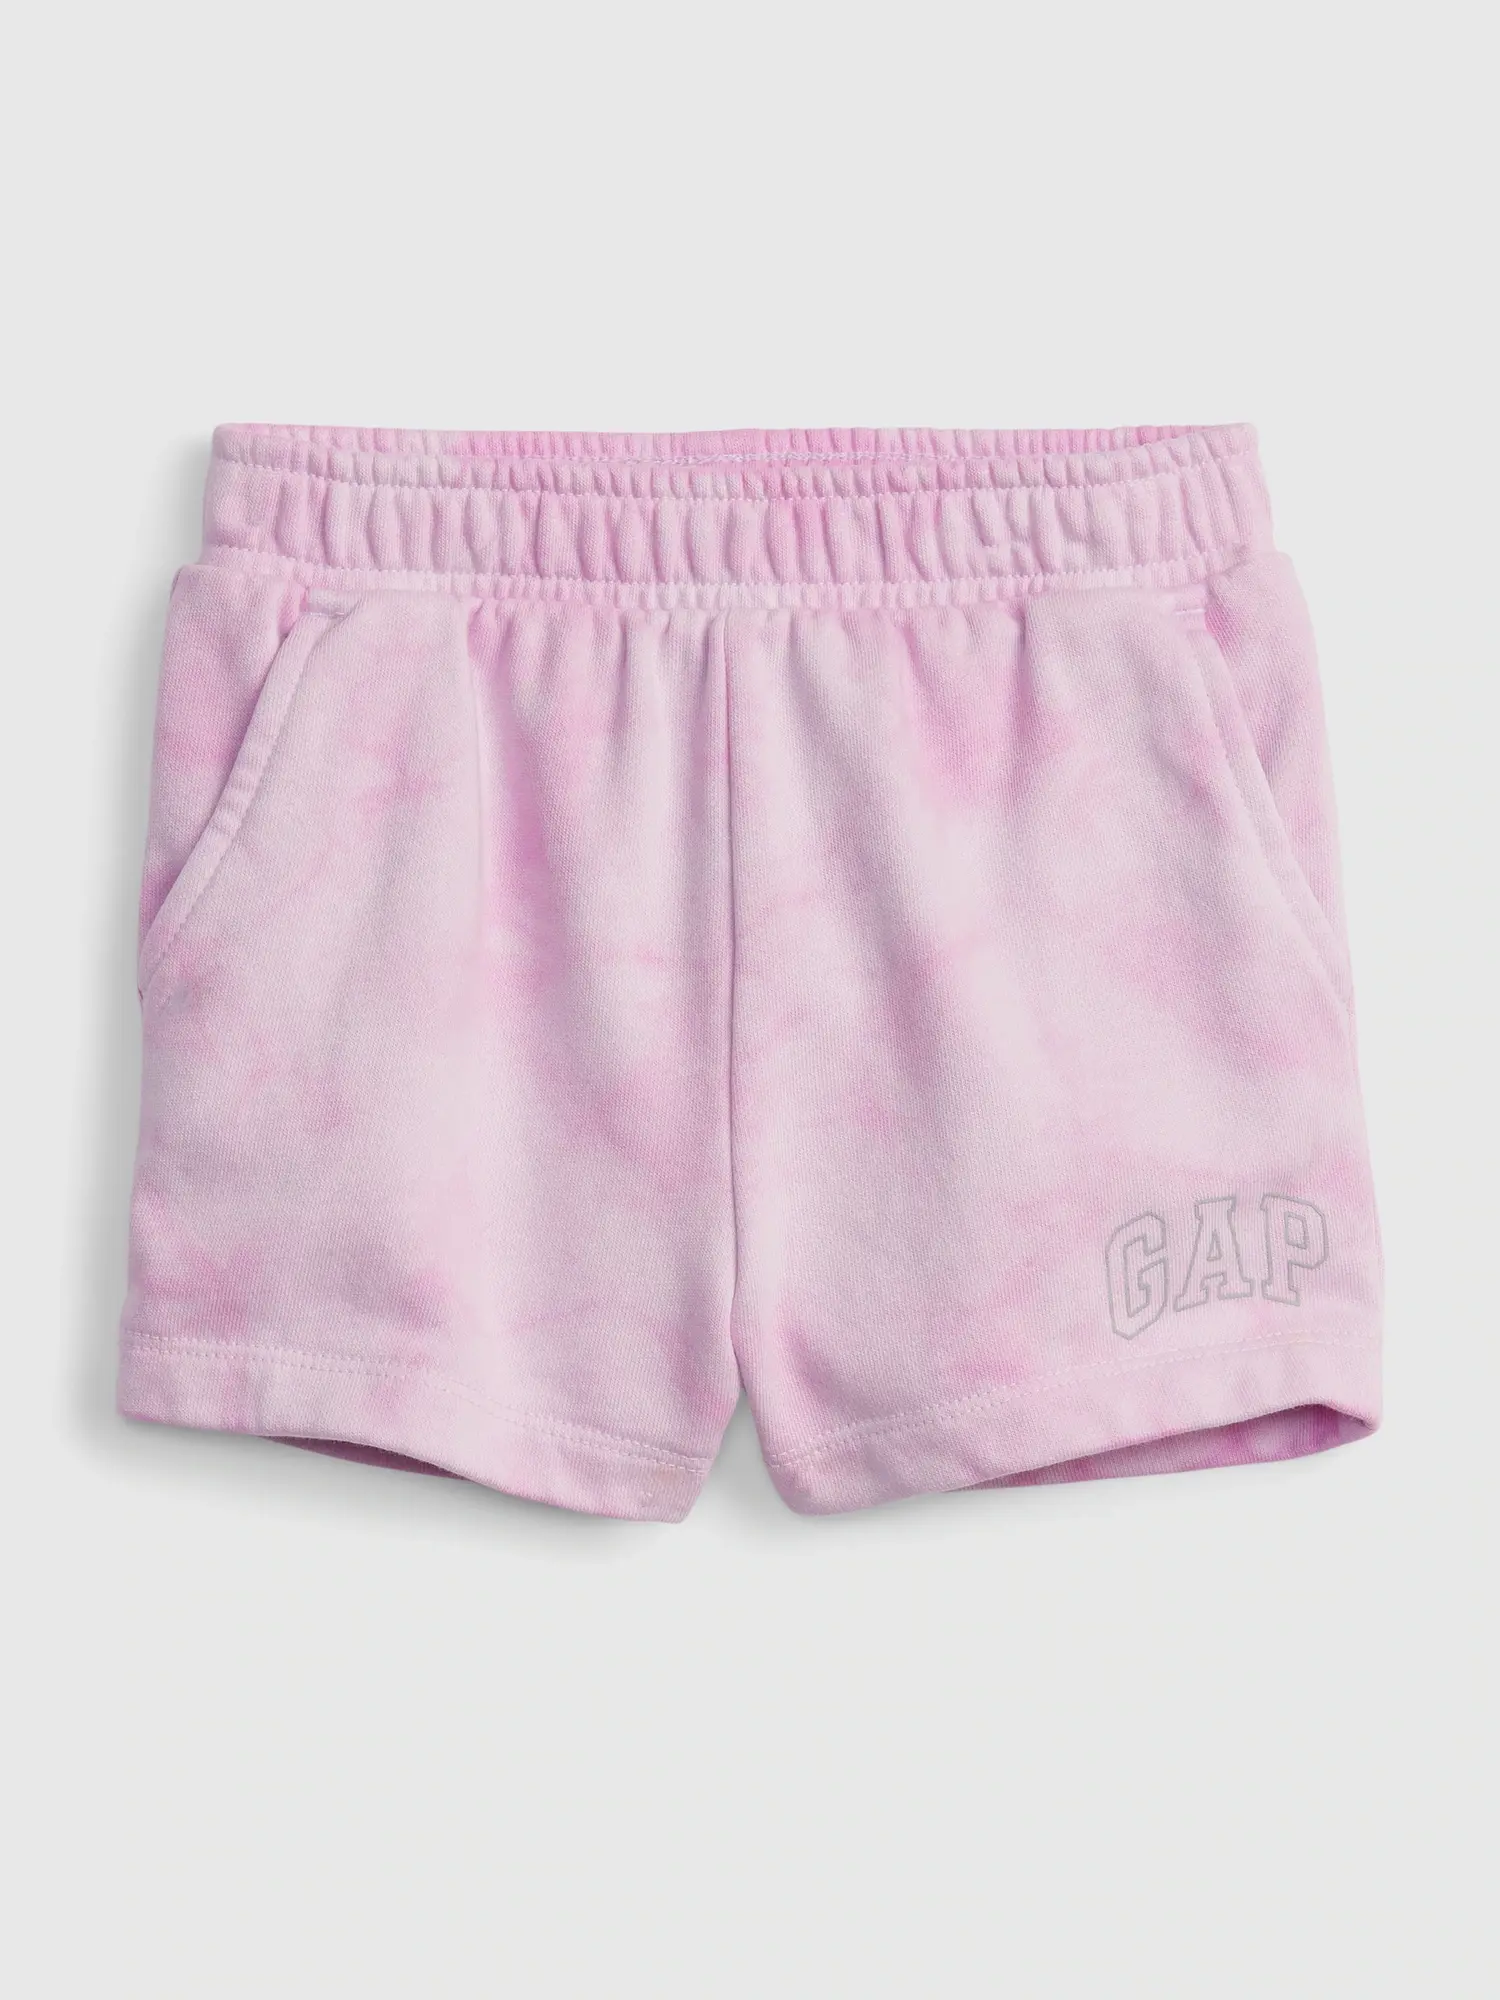 Gap Toddler Pull-On Shorts purple. 1